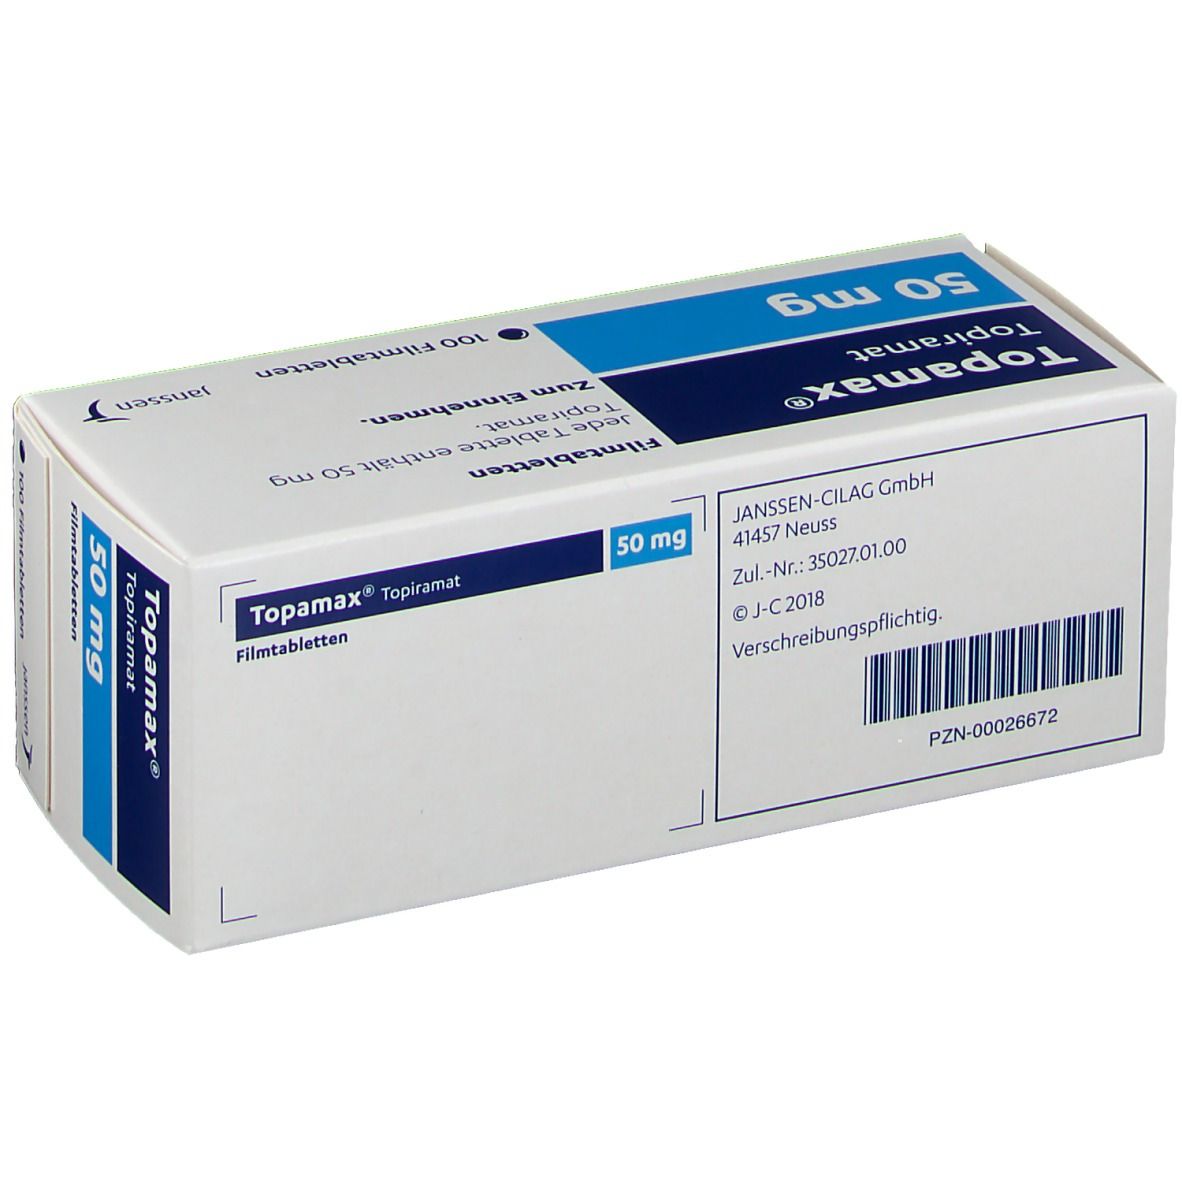 Topamax® 50 mg